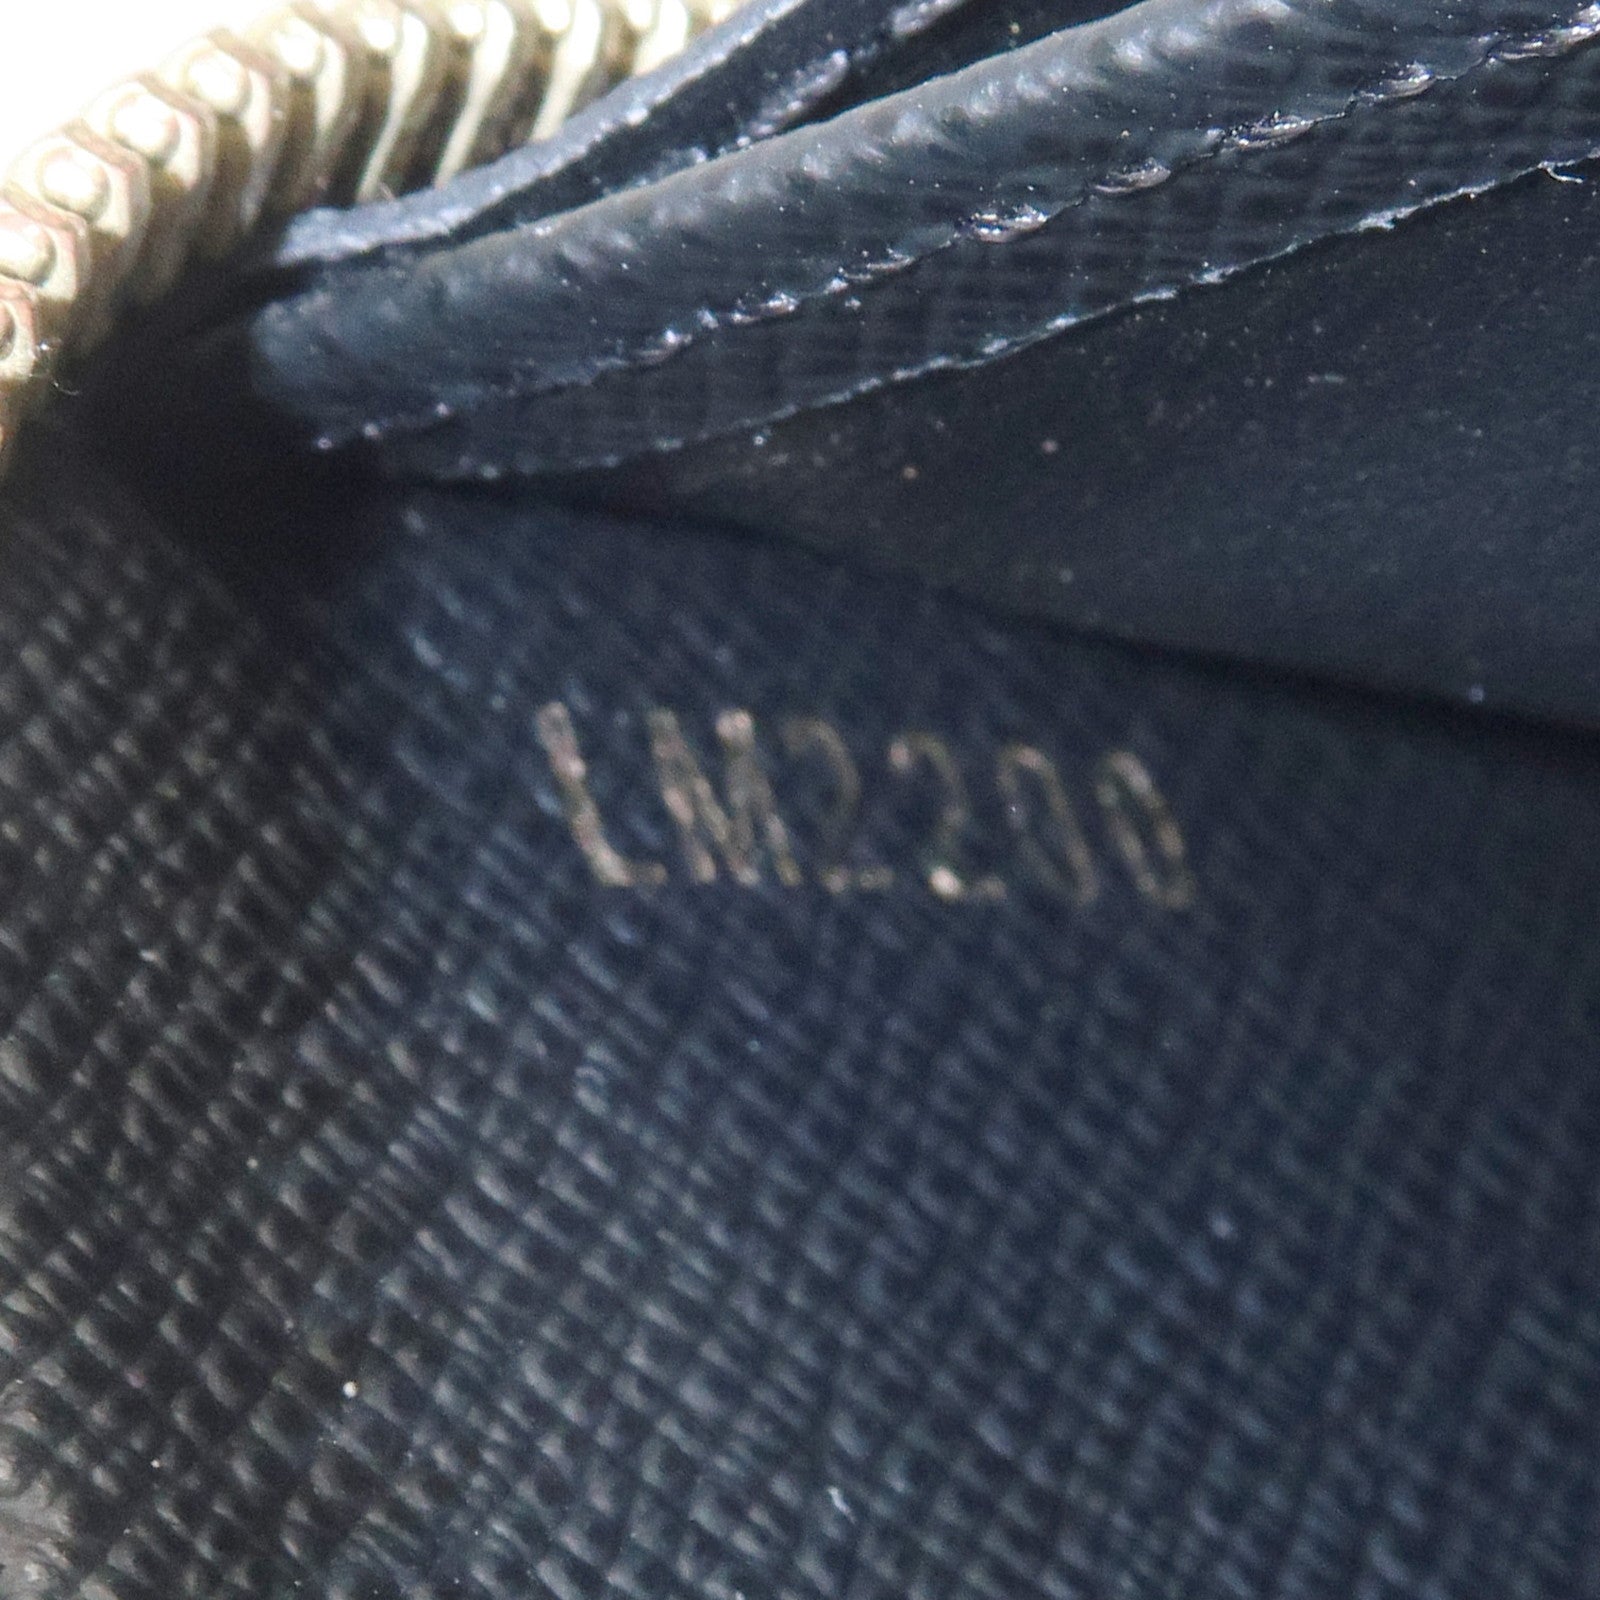 Shop Louis Vuitton ZIPPY WALLET Zippy wallet (M69353, M69353) by